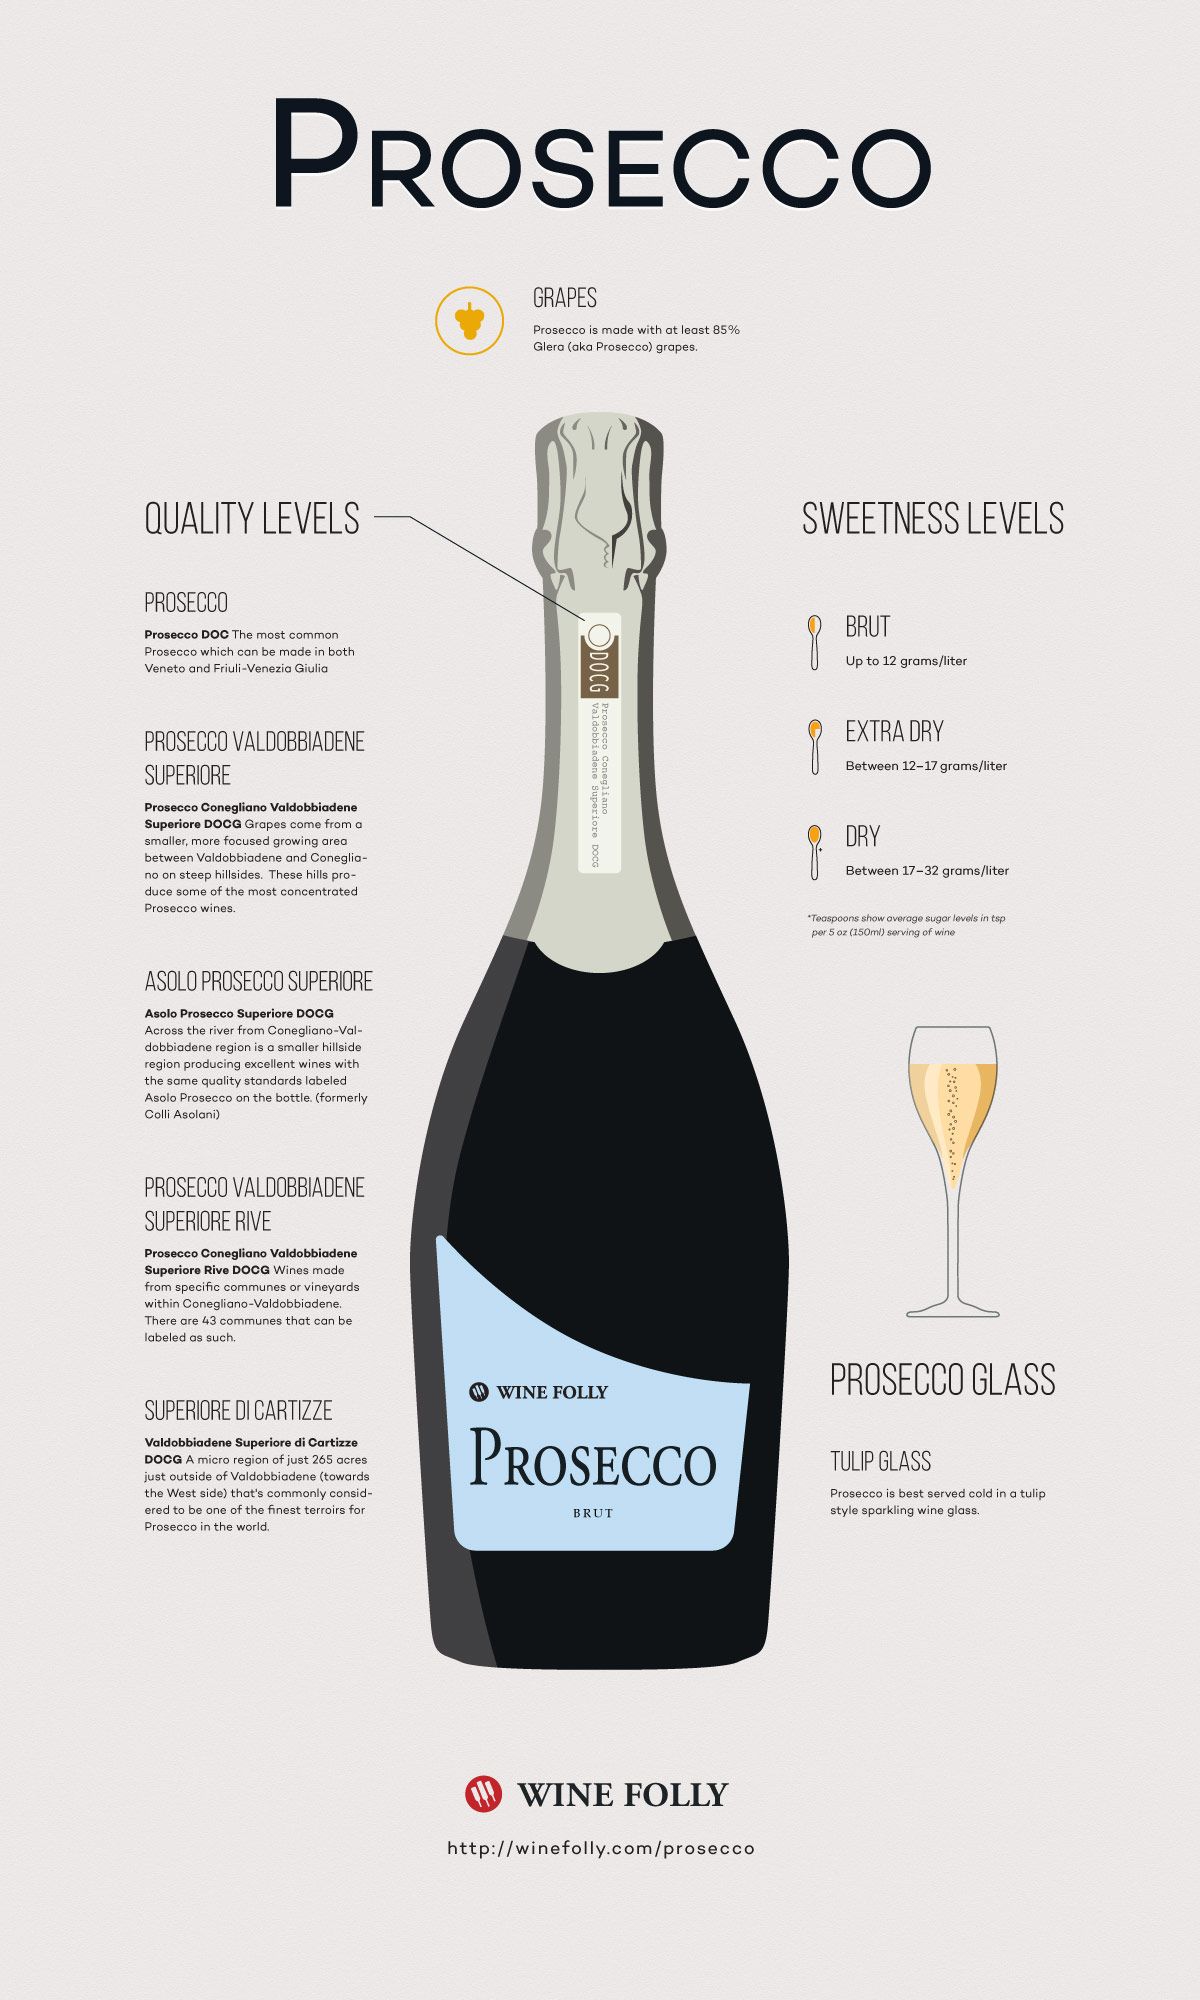 Guide visuel du vin Prosecco par Wine Folly